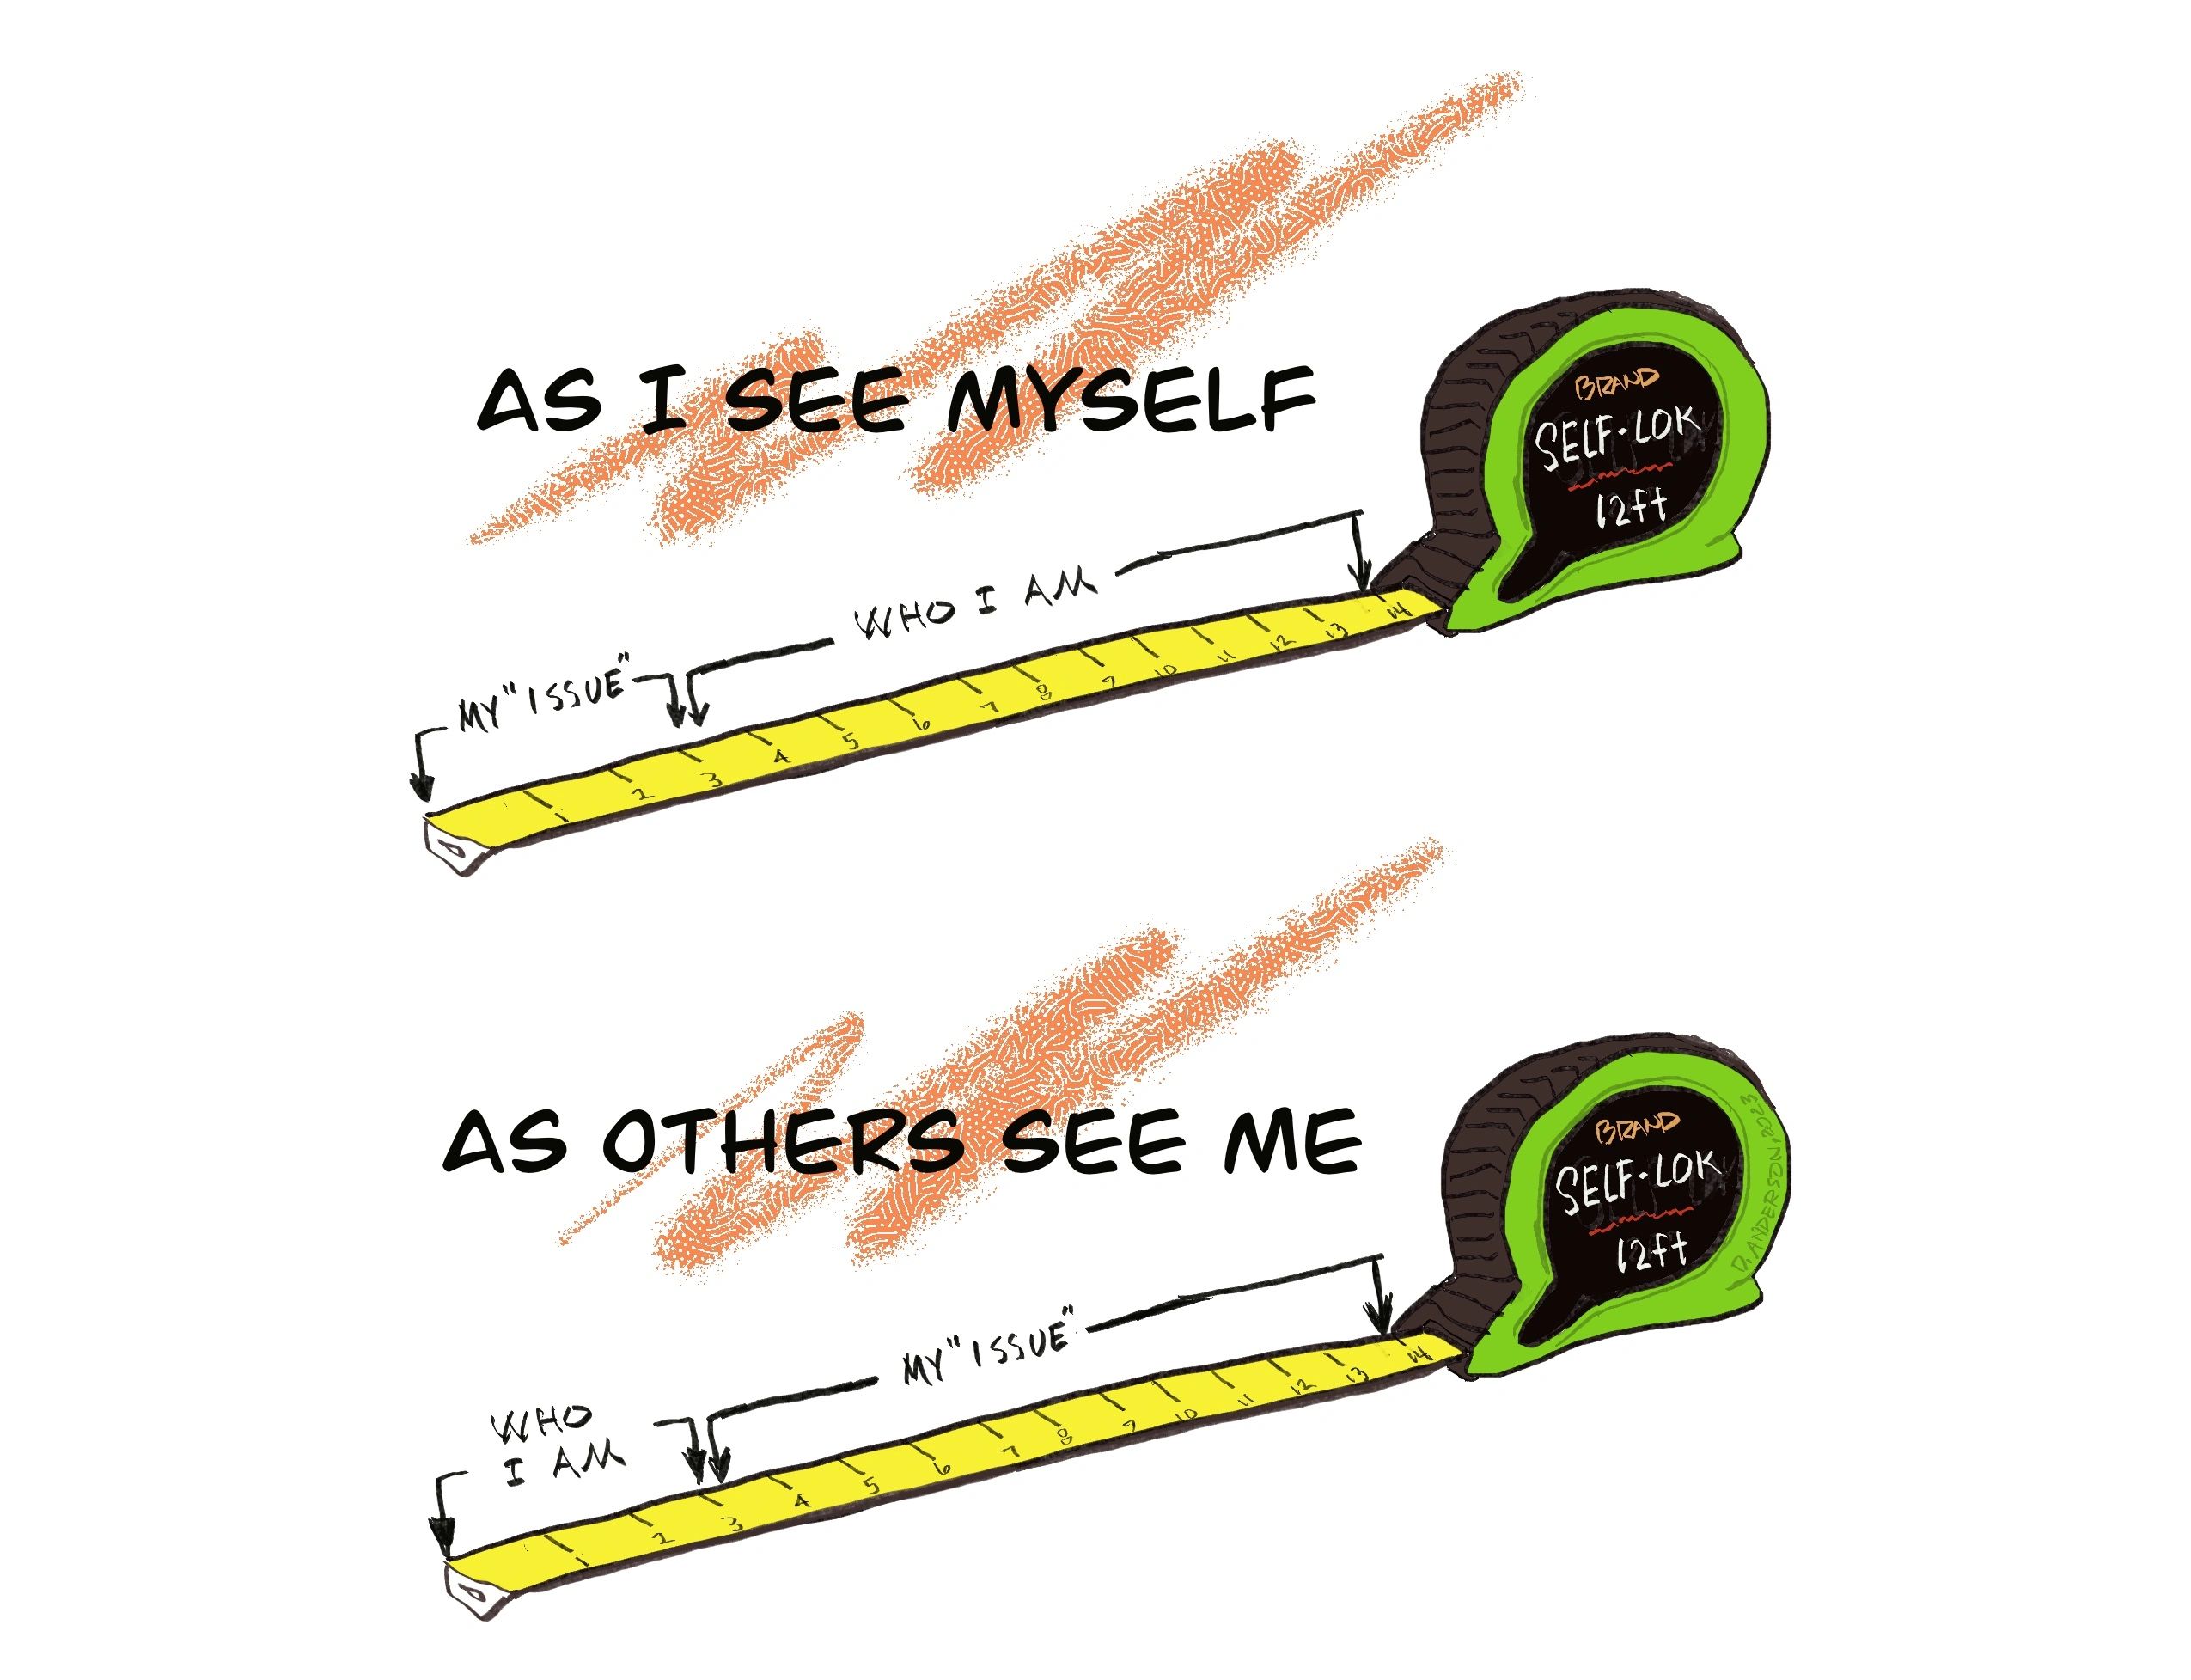 rulers, how I see myself,how others see me